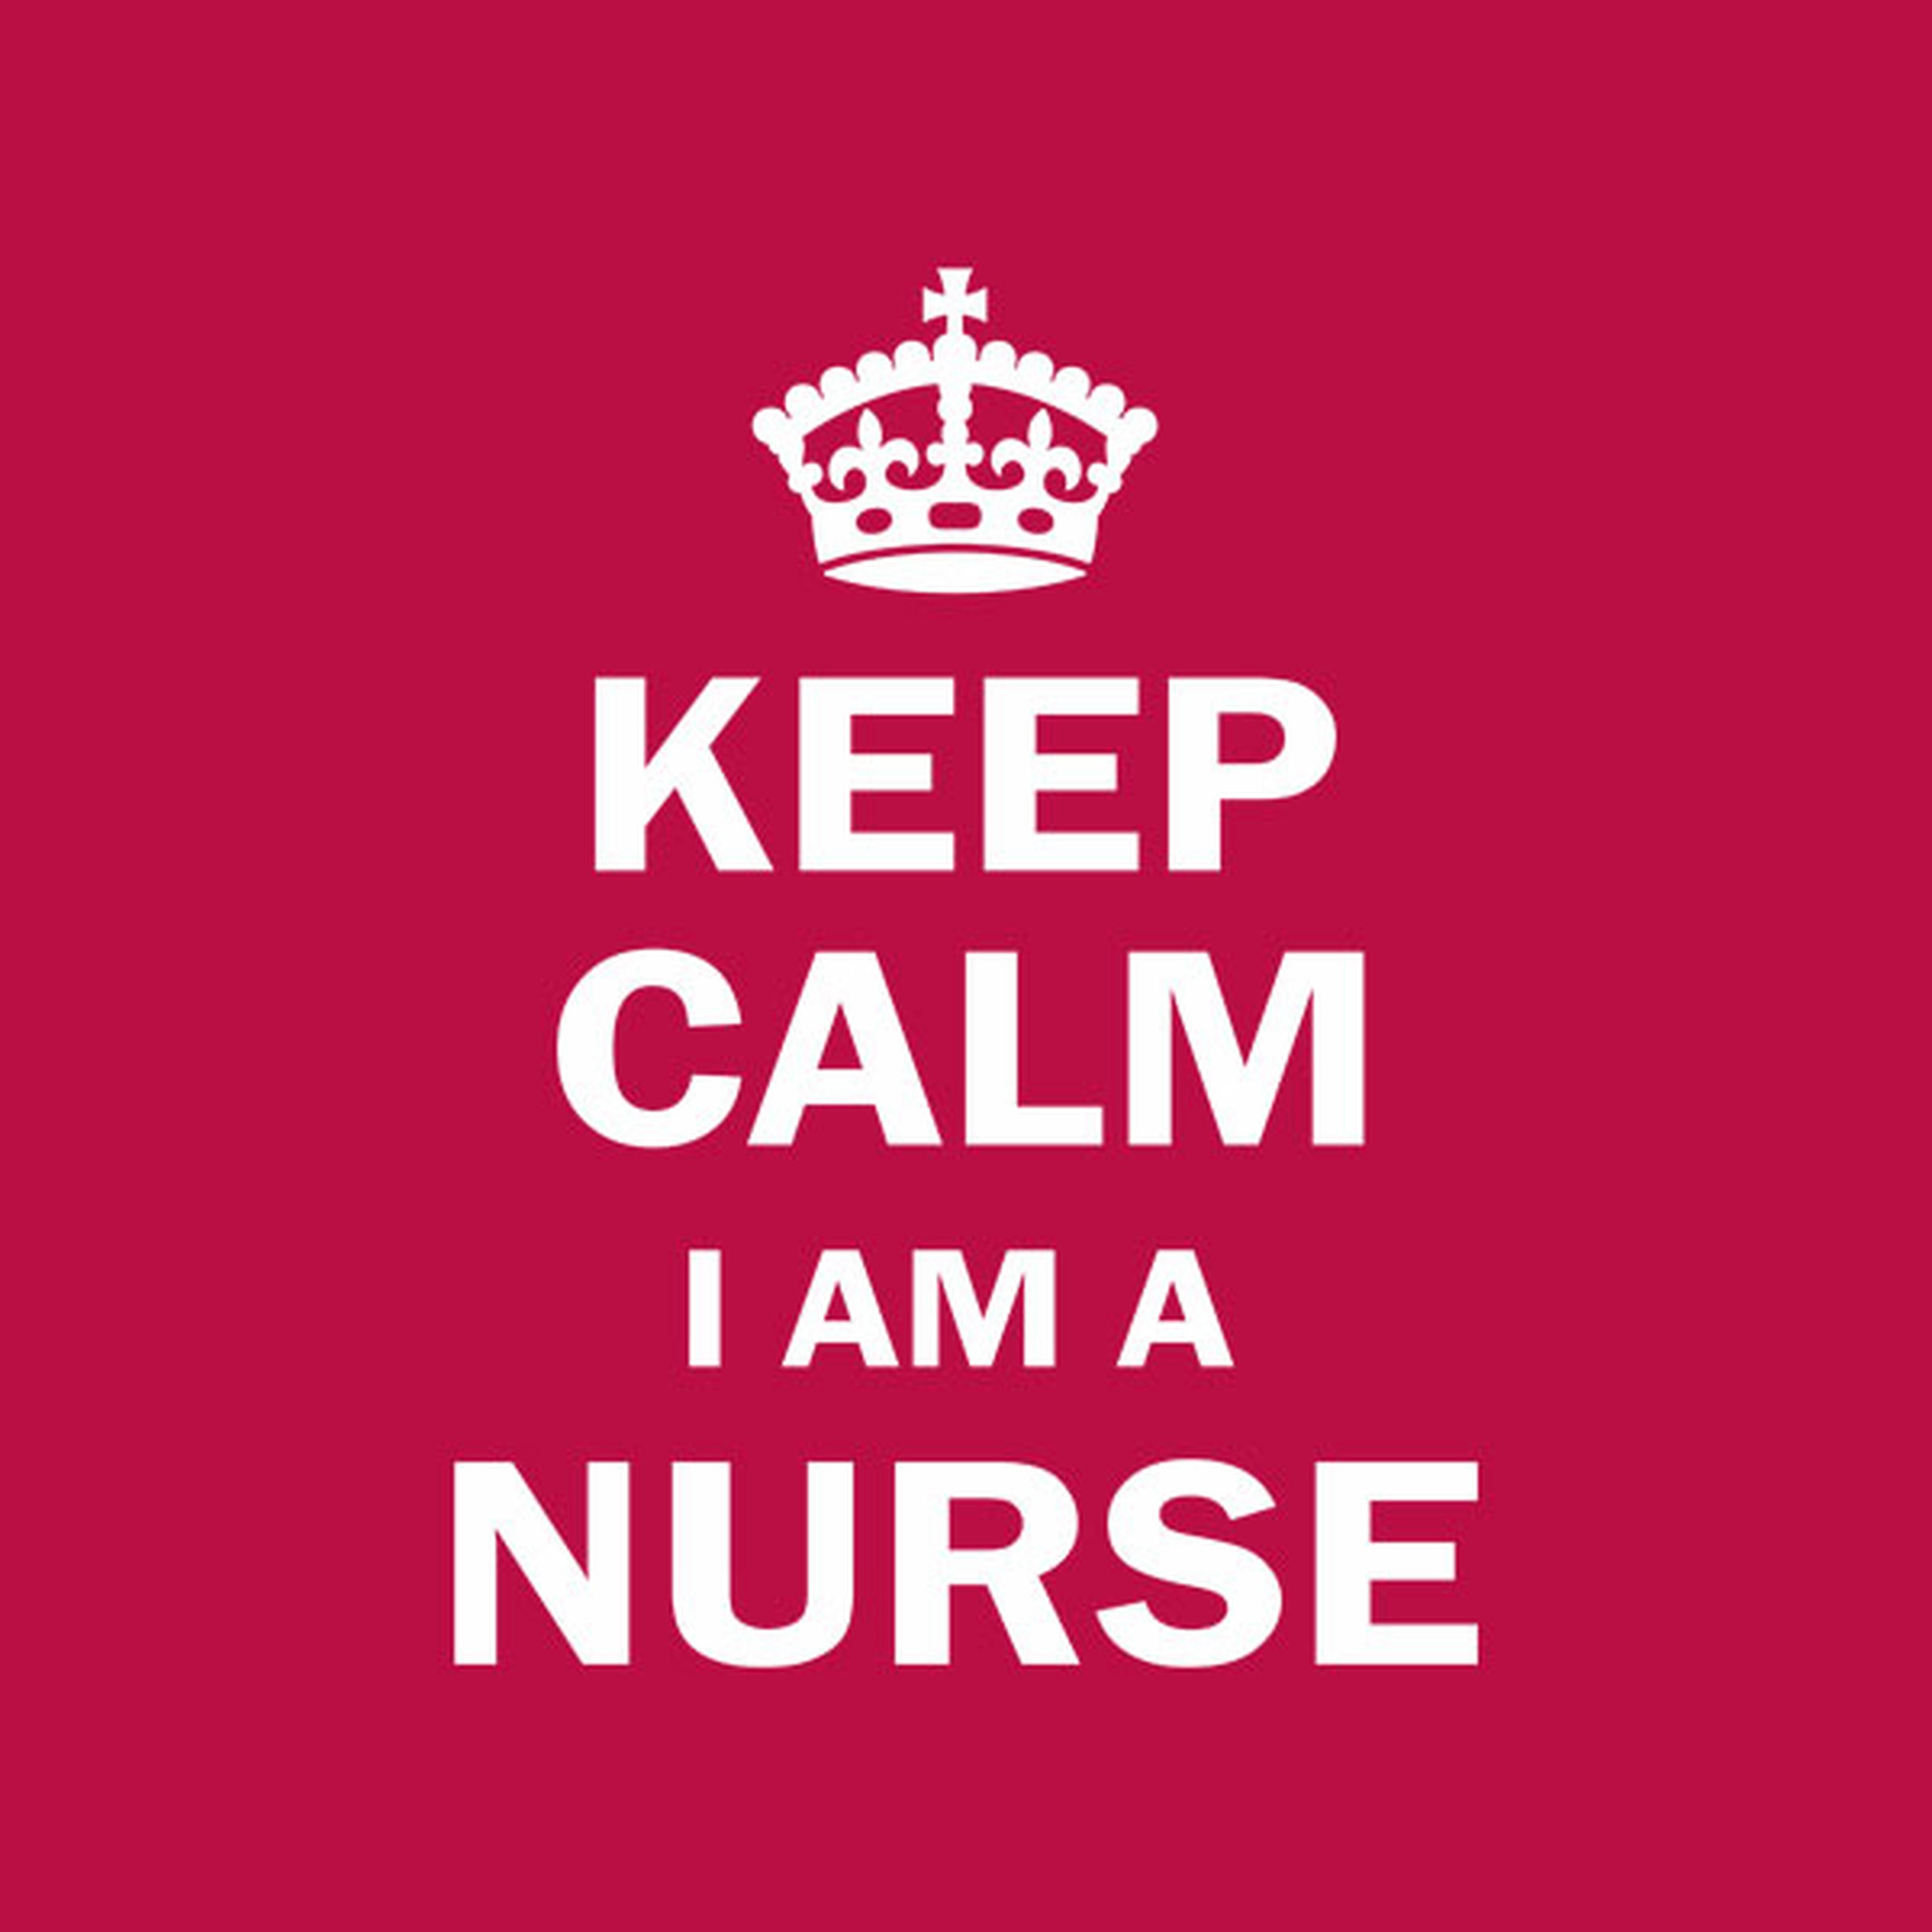 Keep calm. I am a nurse - T-shirt